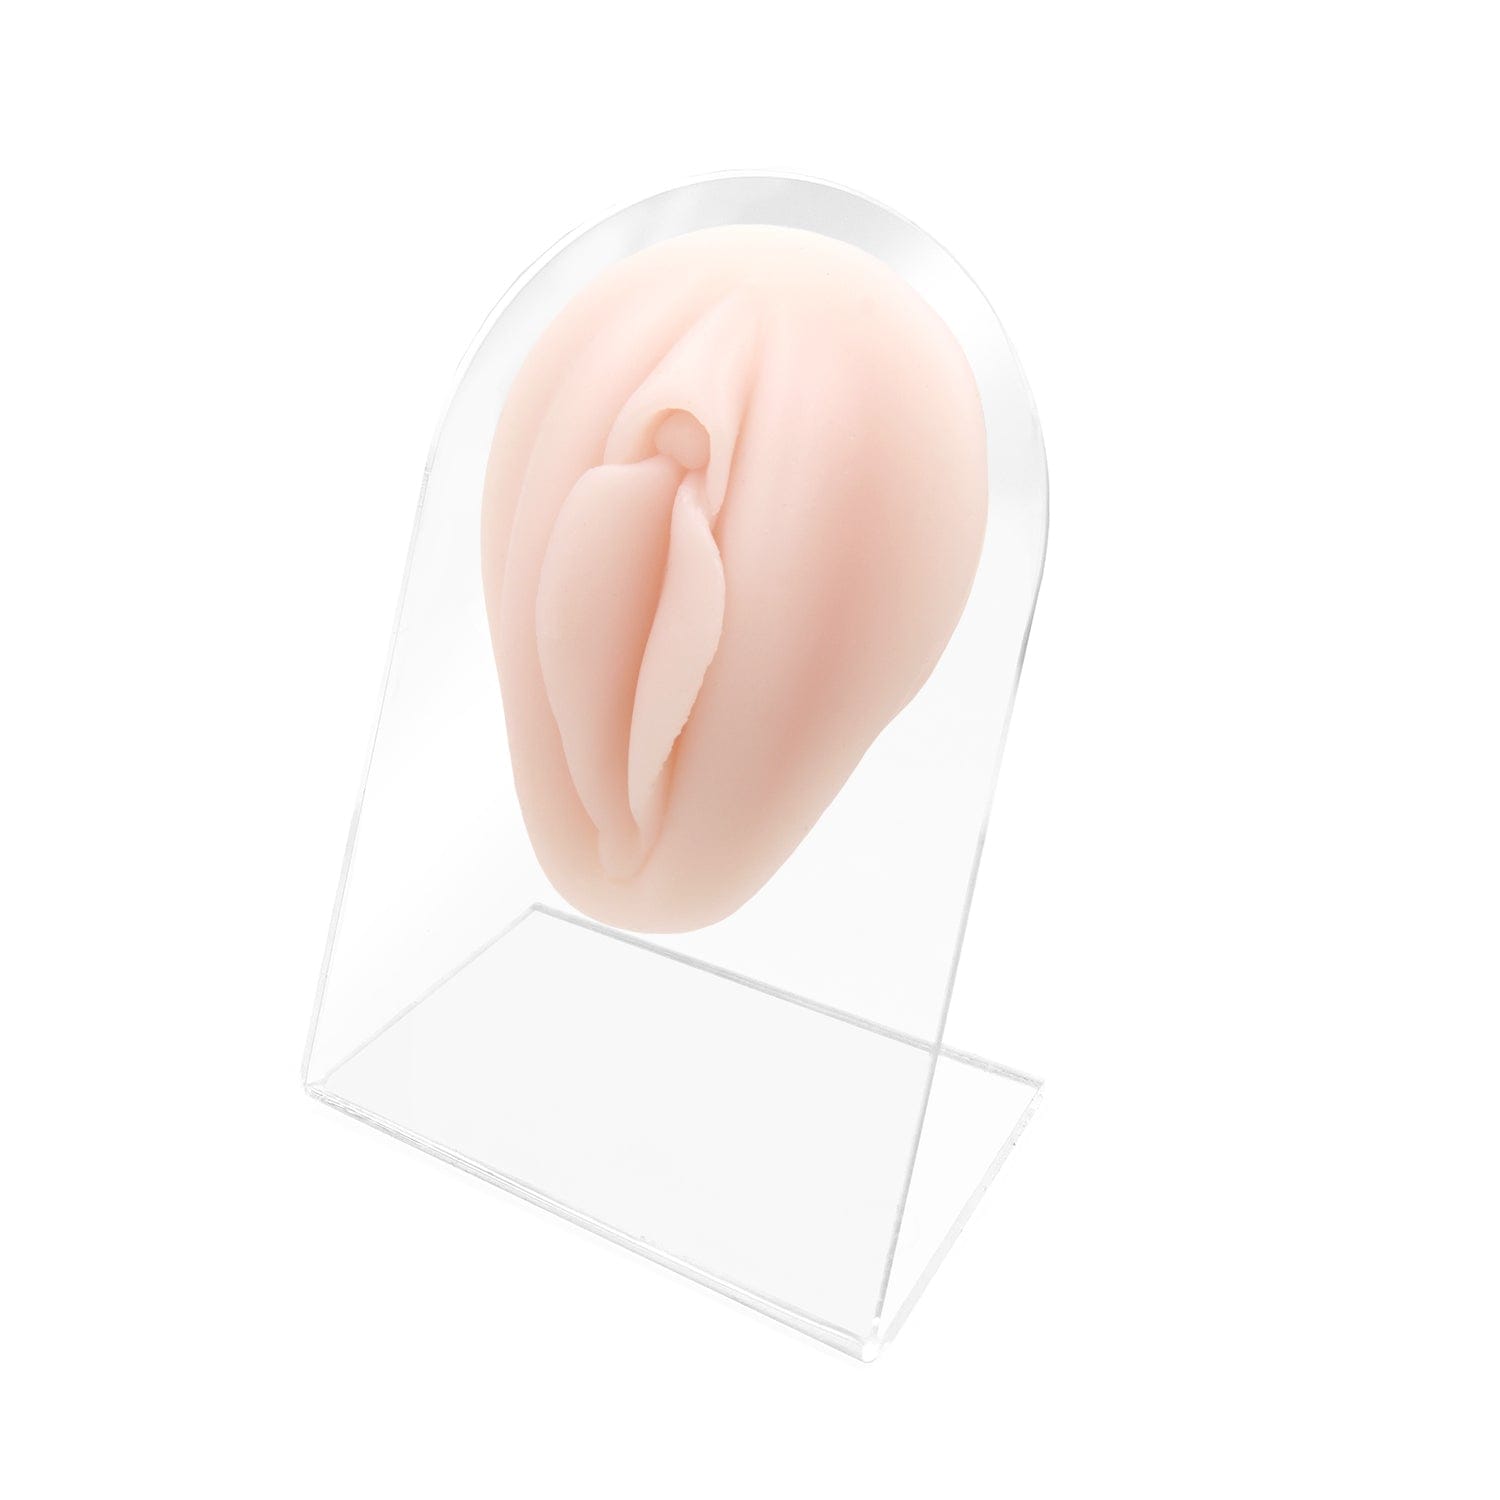 Warrior SP-09 3D Genitale Femminile Vagina Sintetico in Silicone per Pratica Piercing